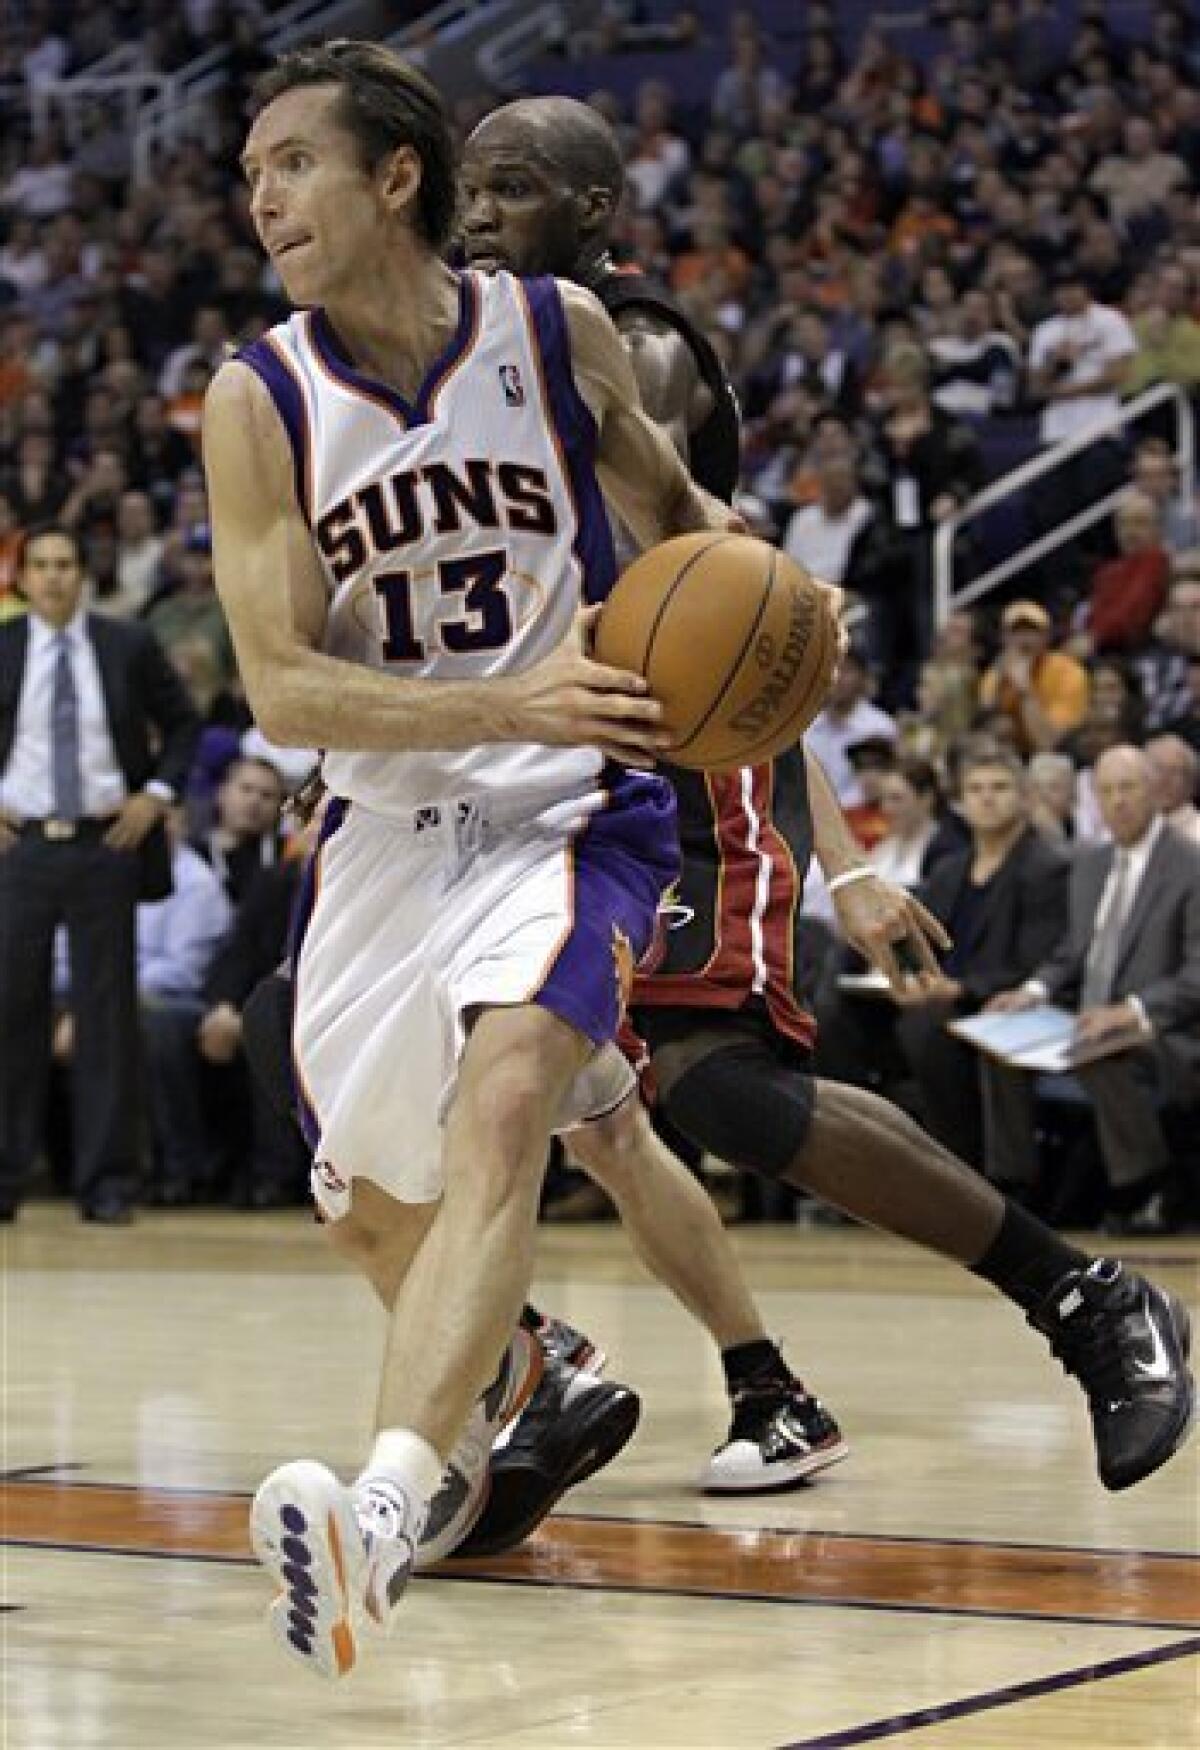 James, Bosh lead Heat to 95-83 win over Suns - The San Diego Union-Tribune